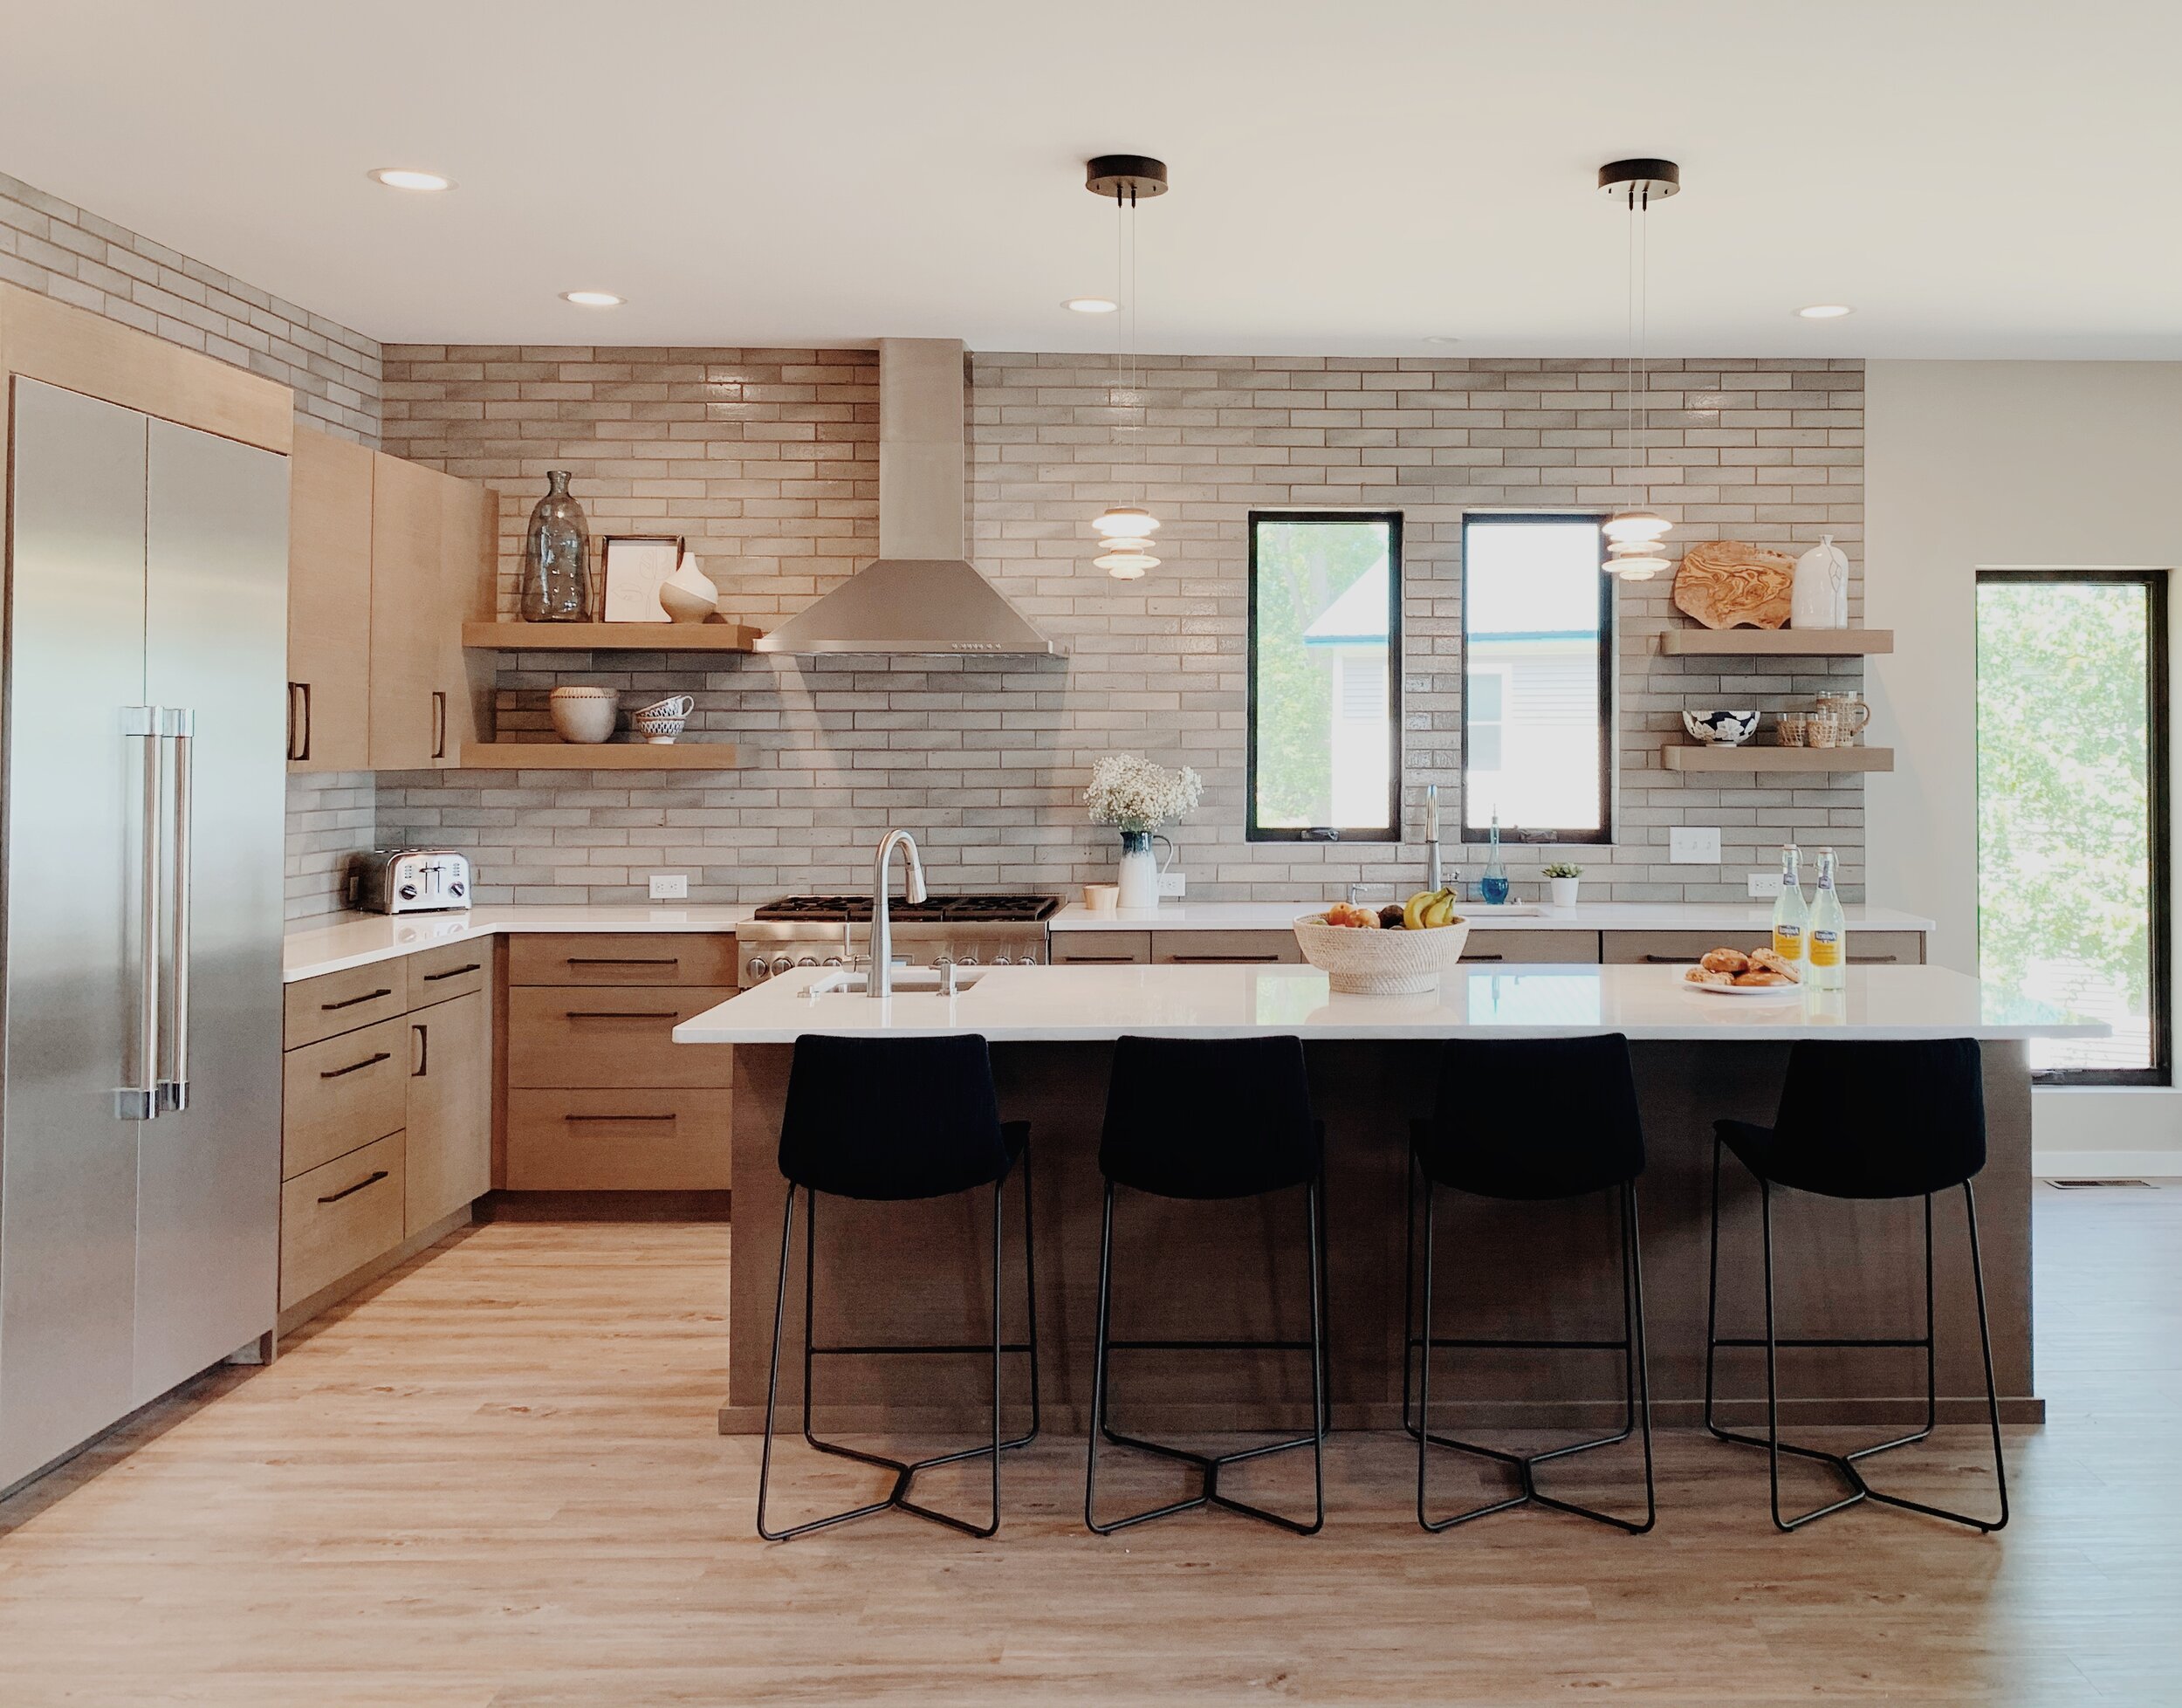  kitchen design, custom cabinets, kitchen countertops, kitchen lighting, black windows, neutral paint 